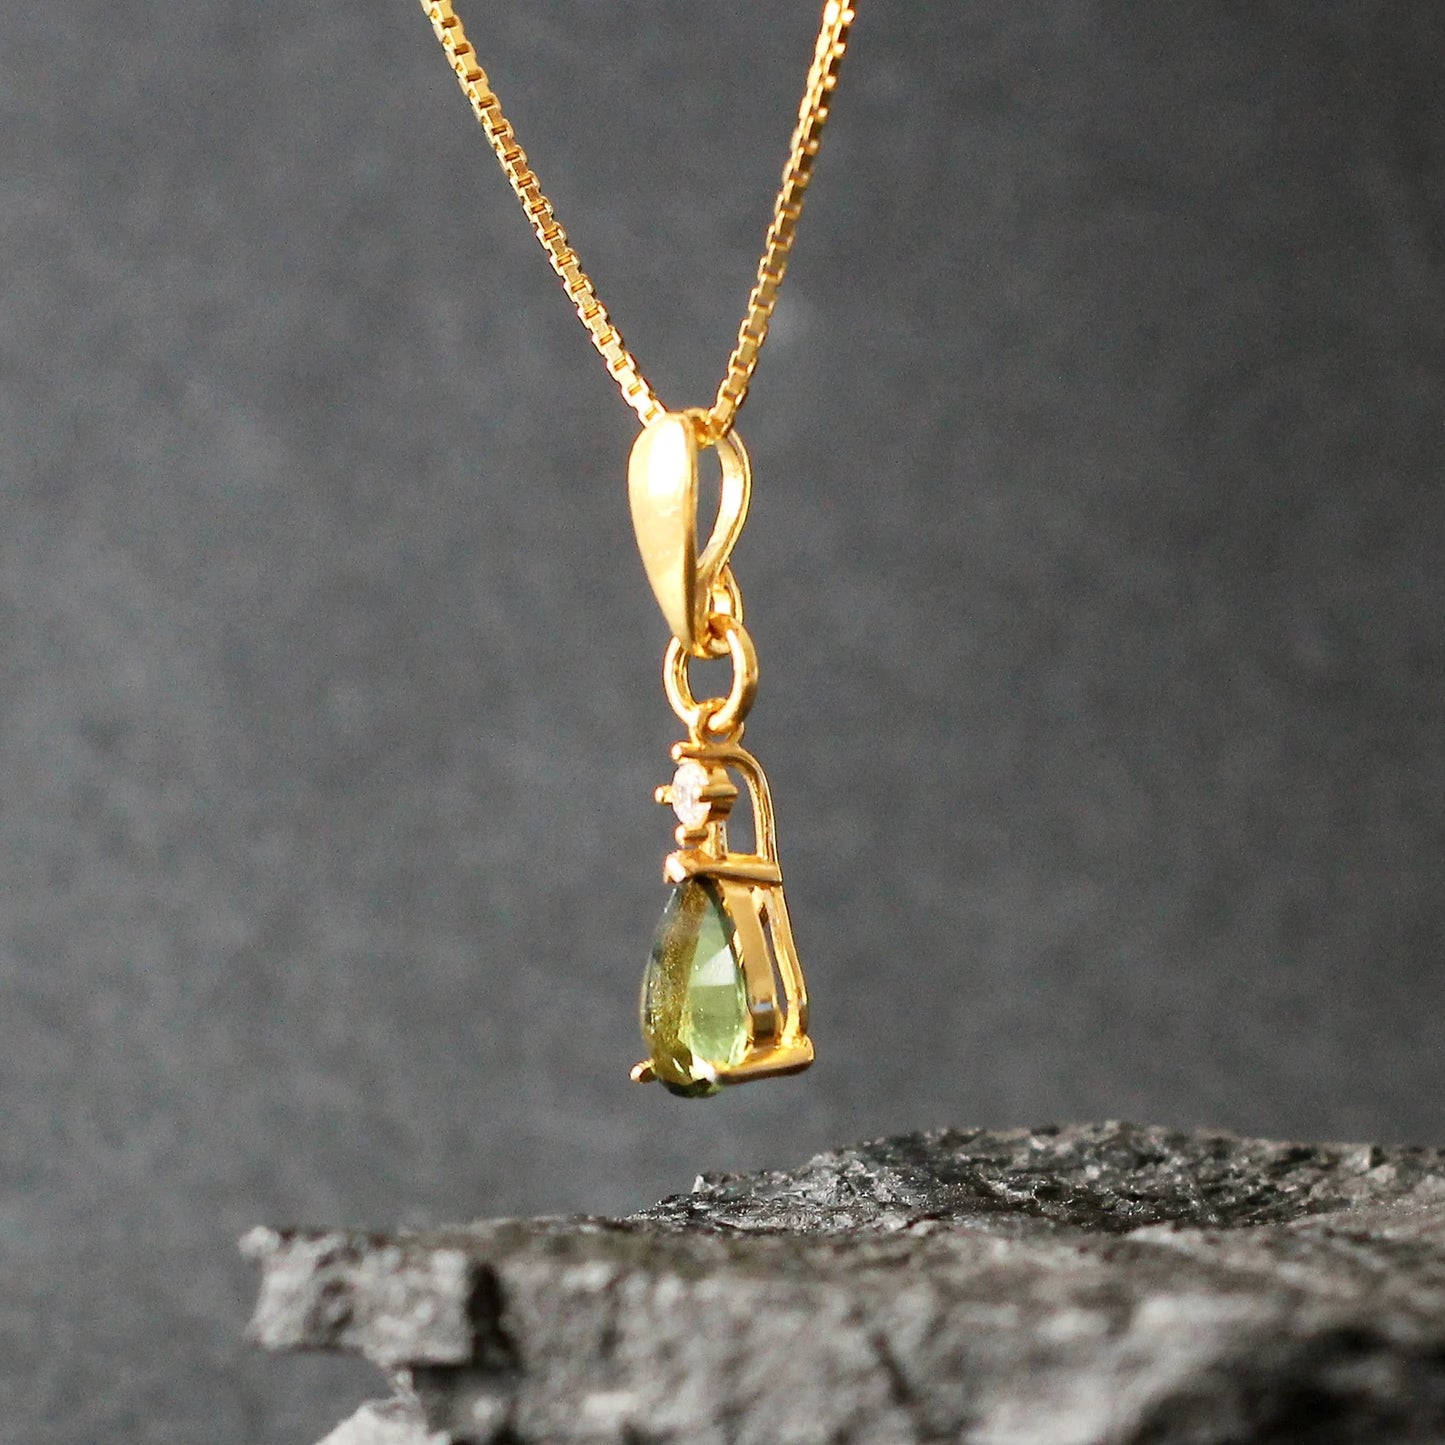 6.5х8.5 mm stone CZECH MOLDAVITE Pendant Silver Gold Plated Moldavite jewelry- Authentic moldavite necklace real moldavite crystal necklace gift